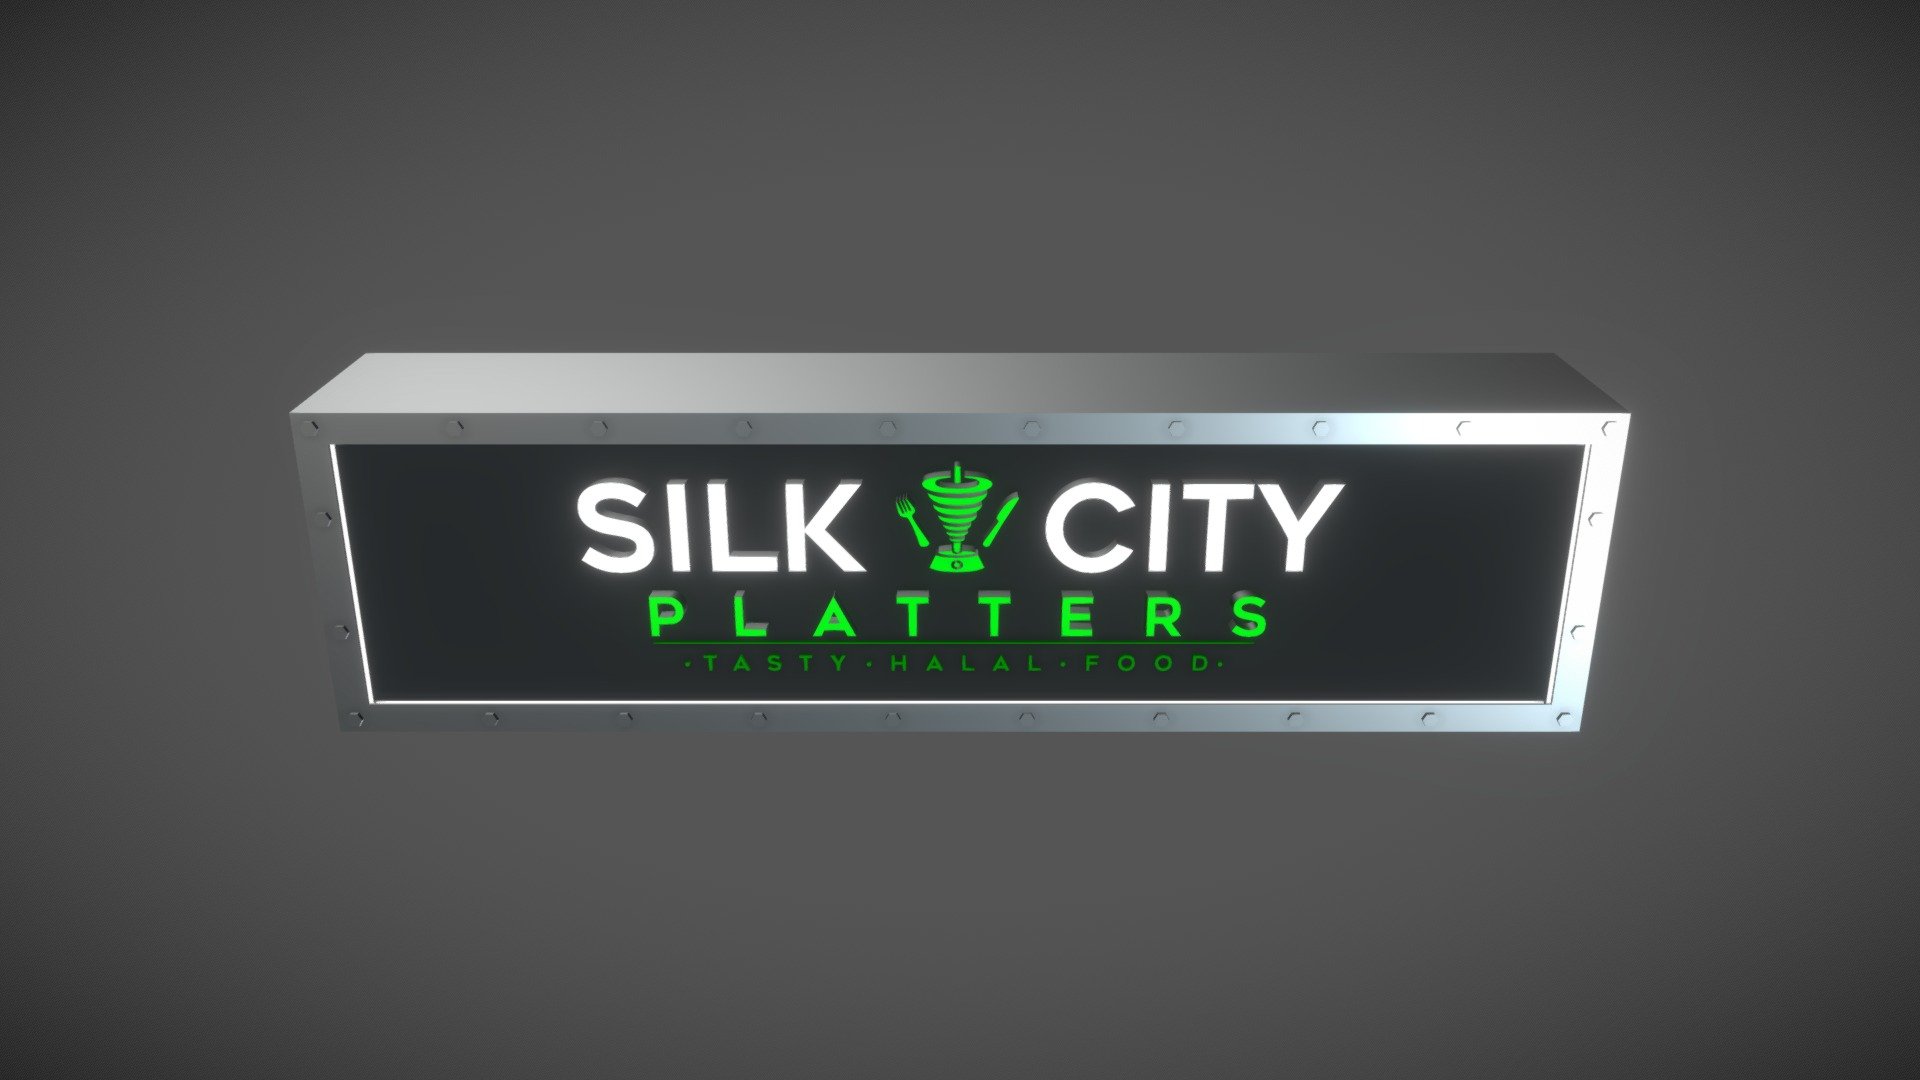 Silk City Platters Awning